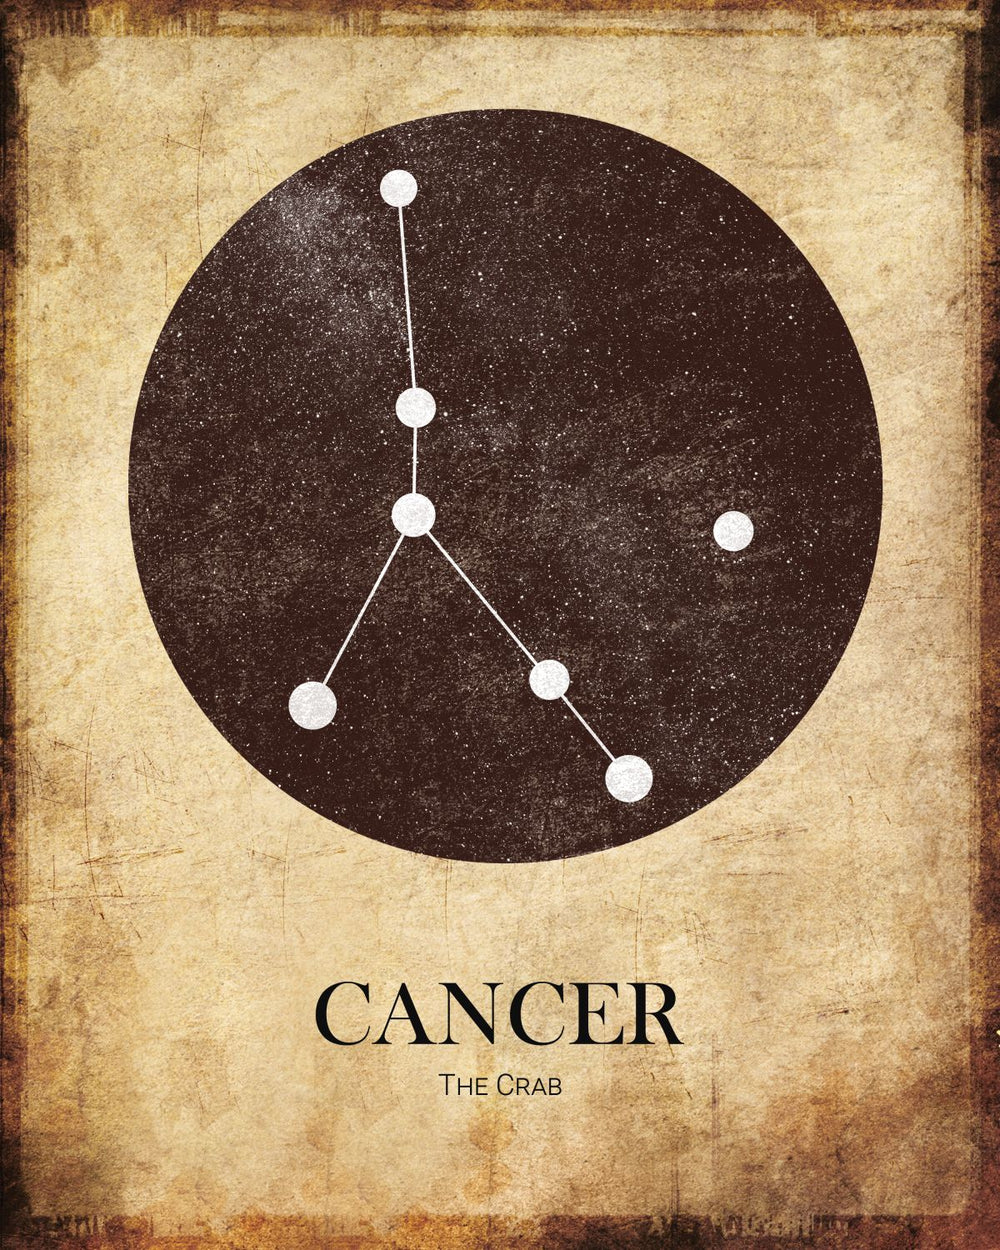 Vintage Cancer Constellation